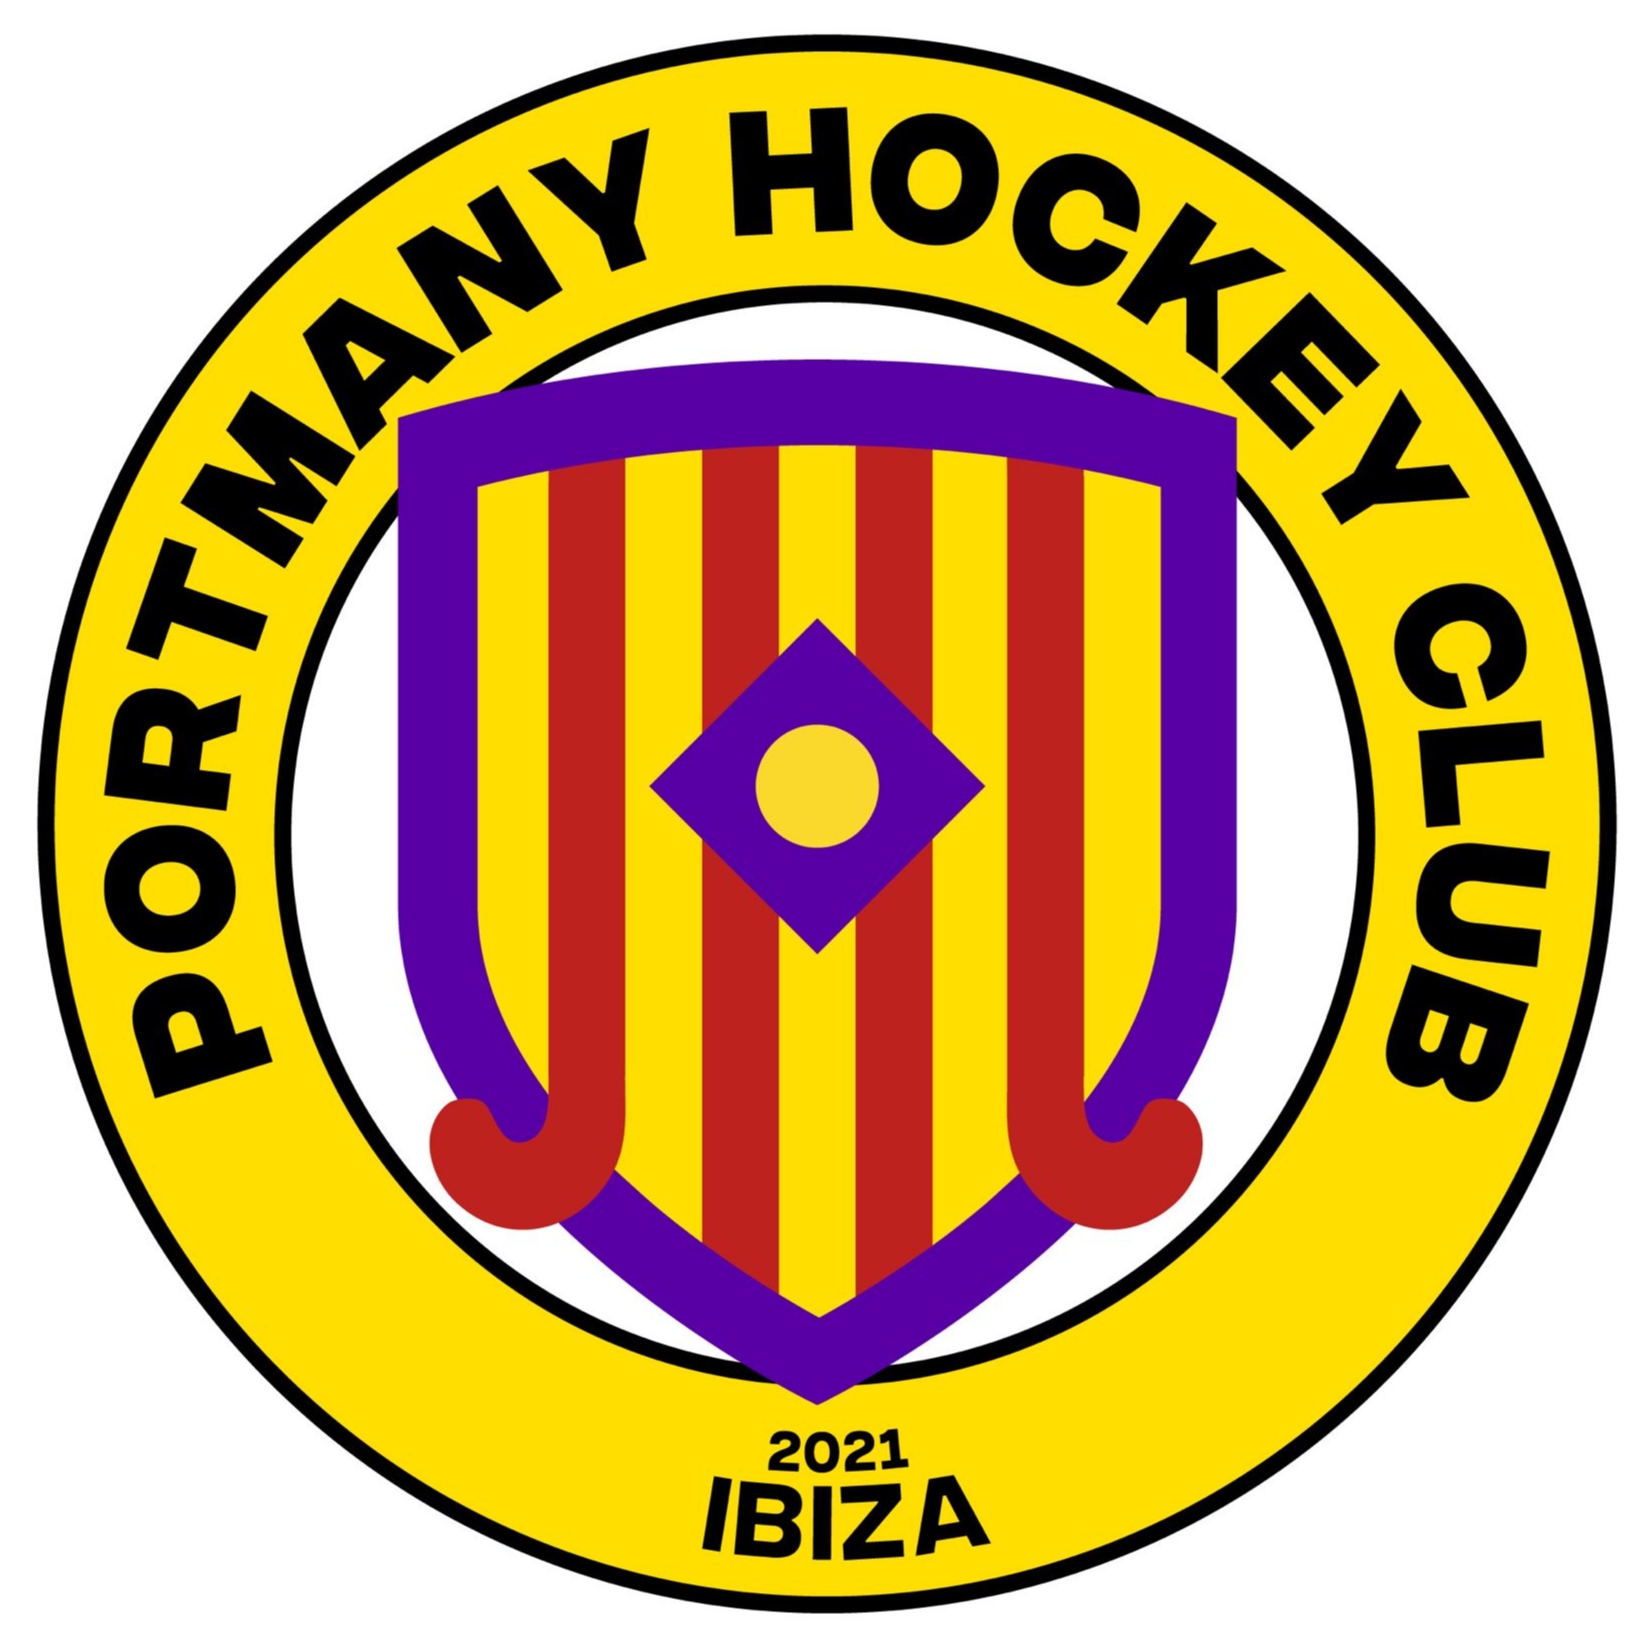 PORTMANY HOCKEY CLUB